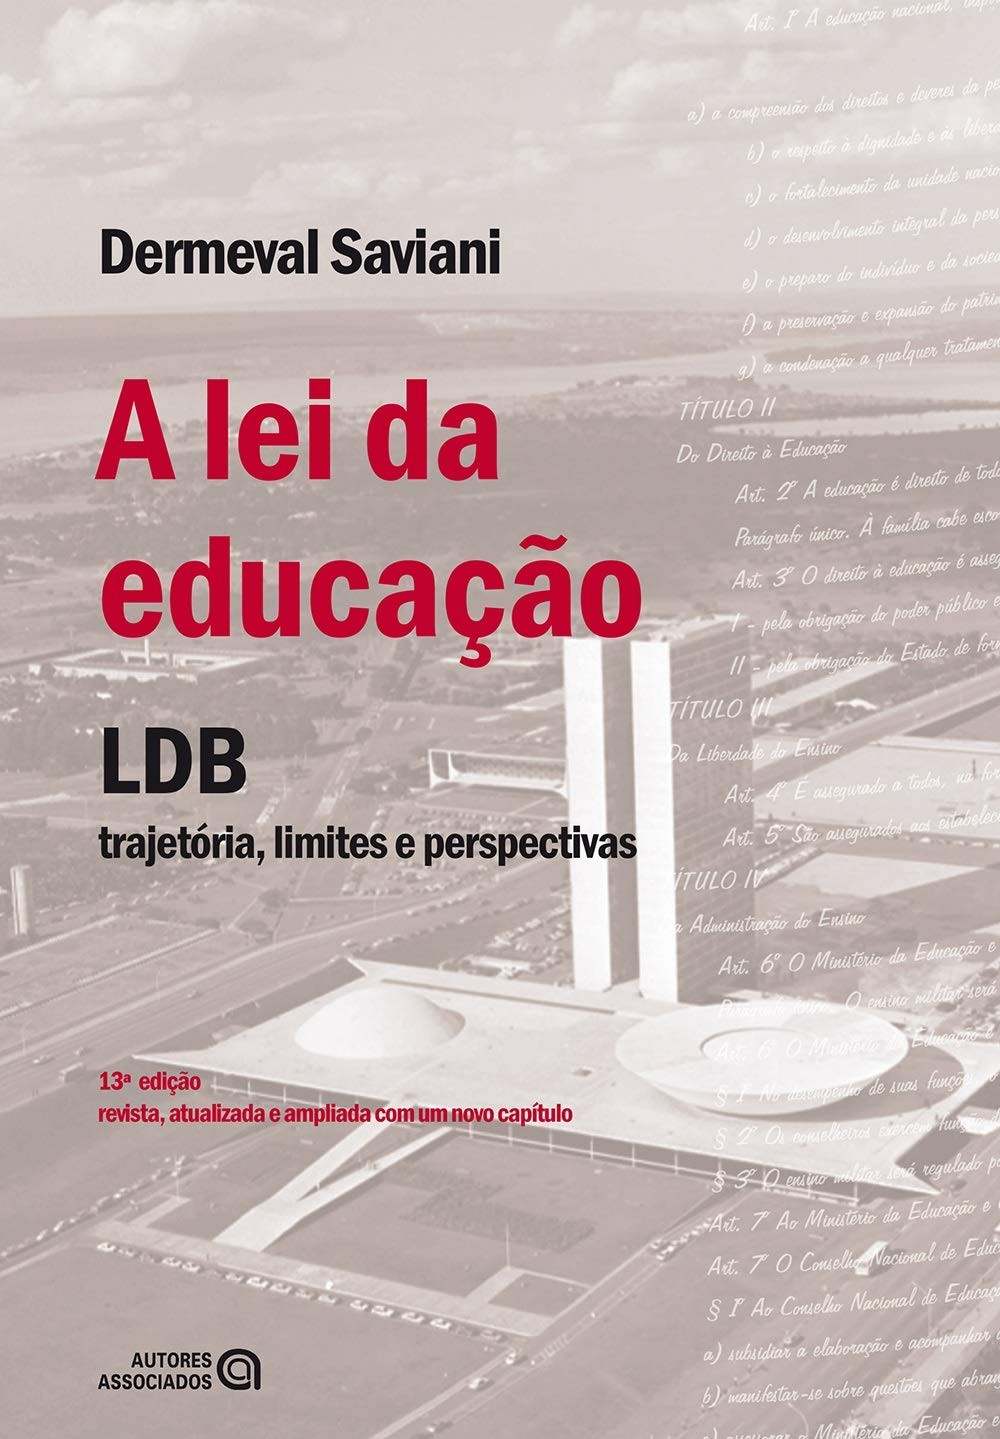 LEI DA EDUCACAO LDB, A: TRAJETORIA, LIMITES E PERSPECTIVAS